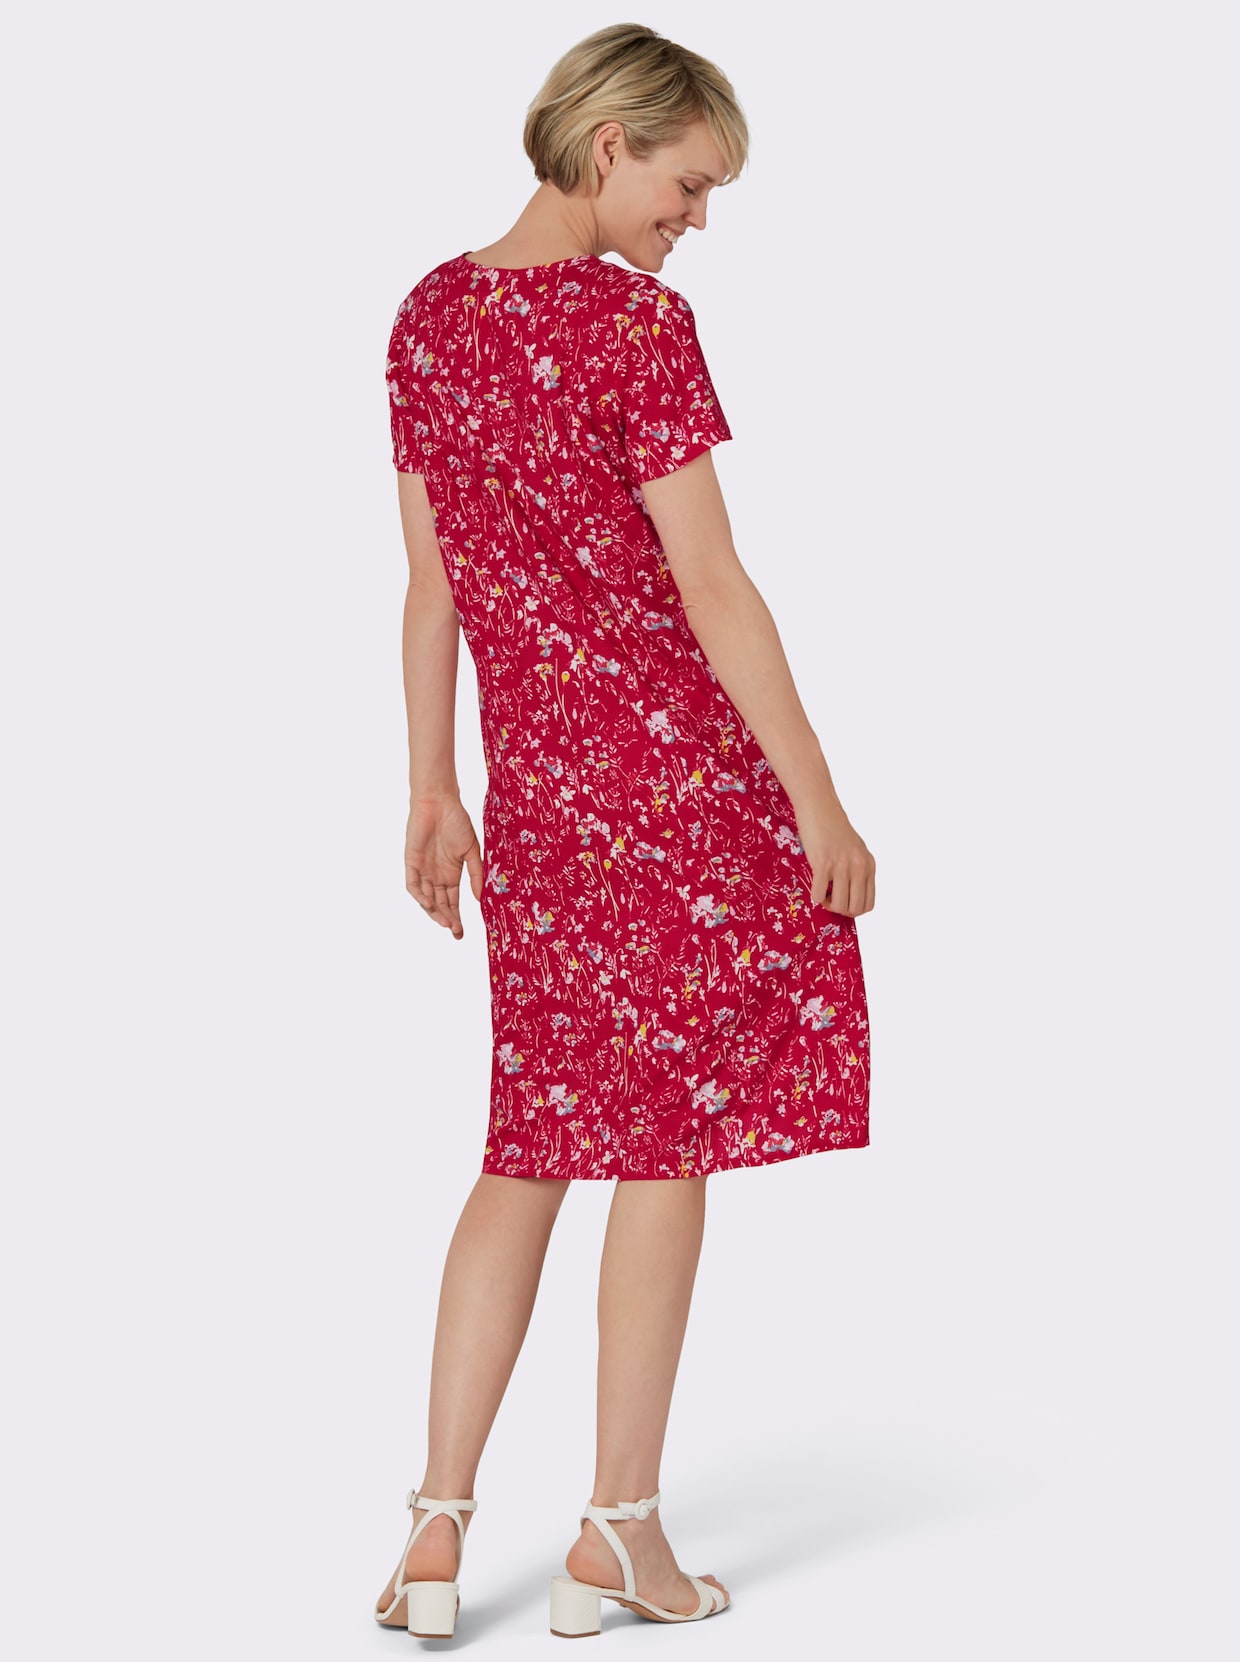 Kleid - rot-taubenblau-bedruckt